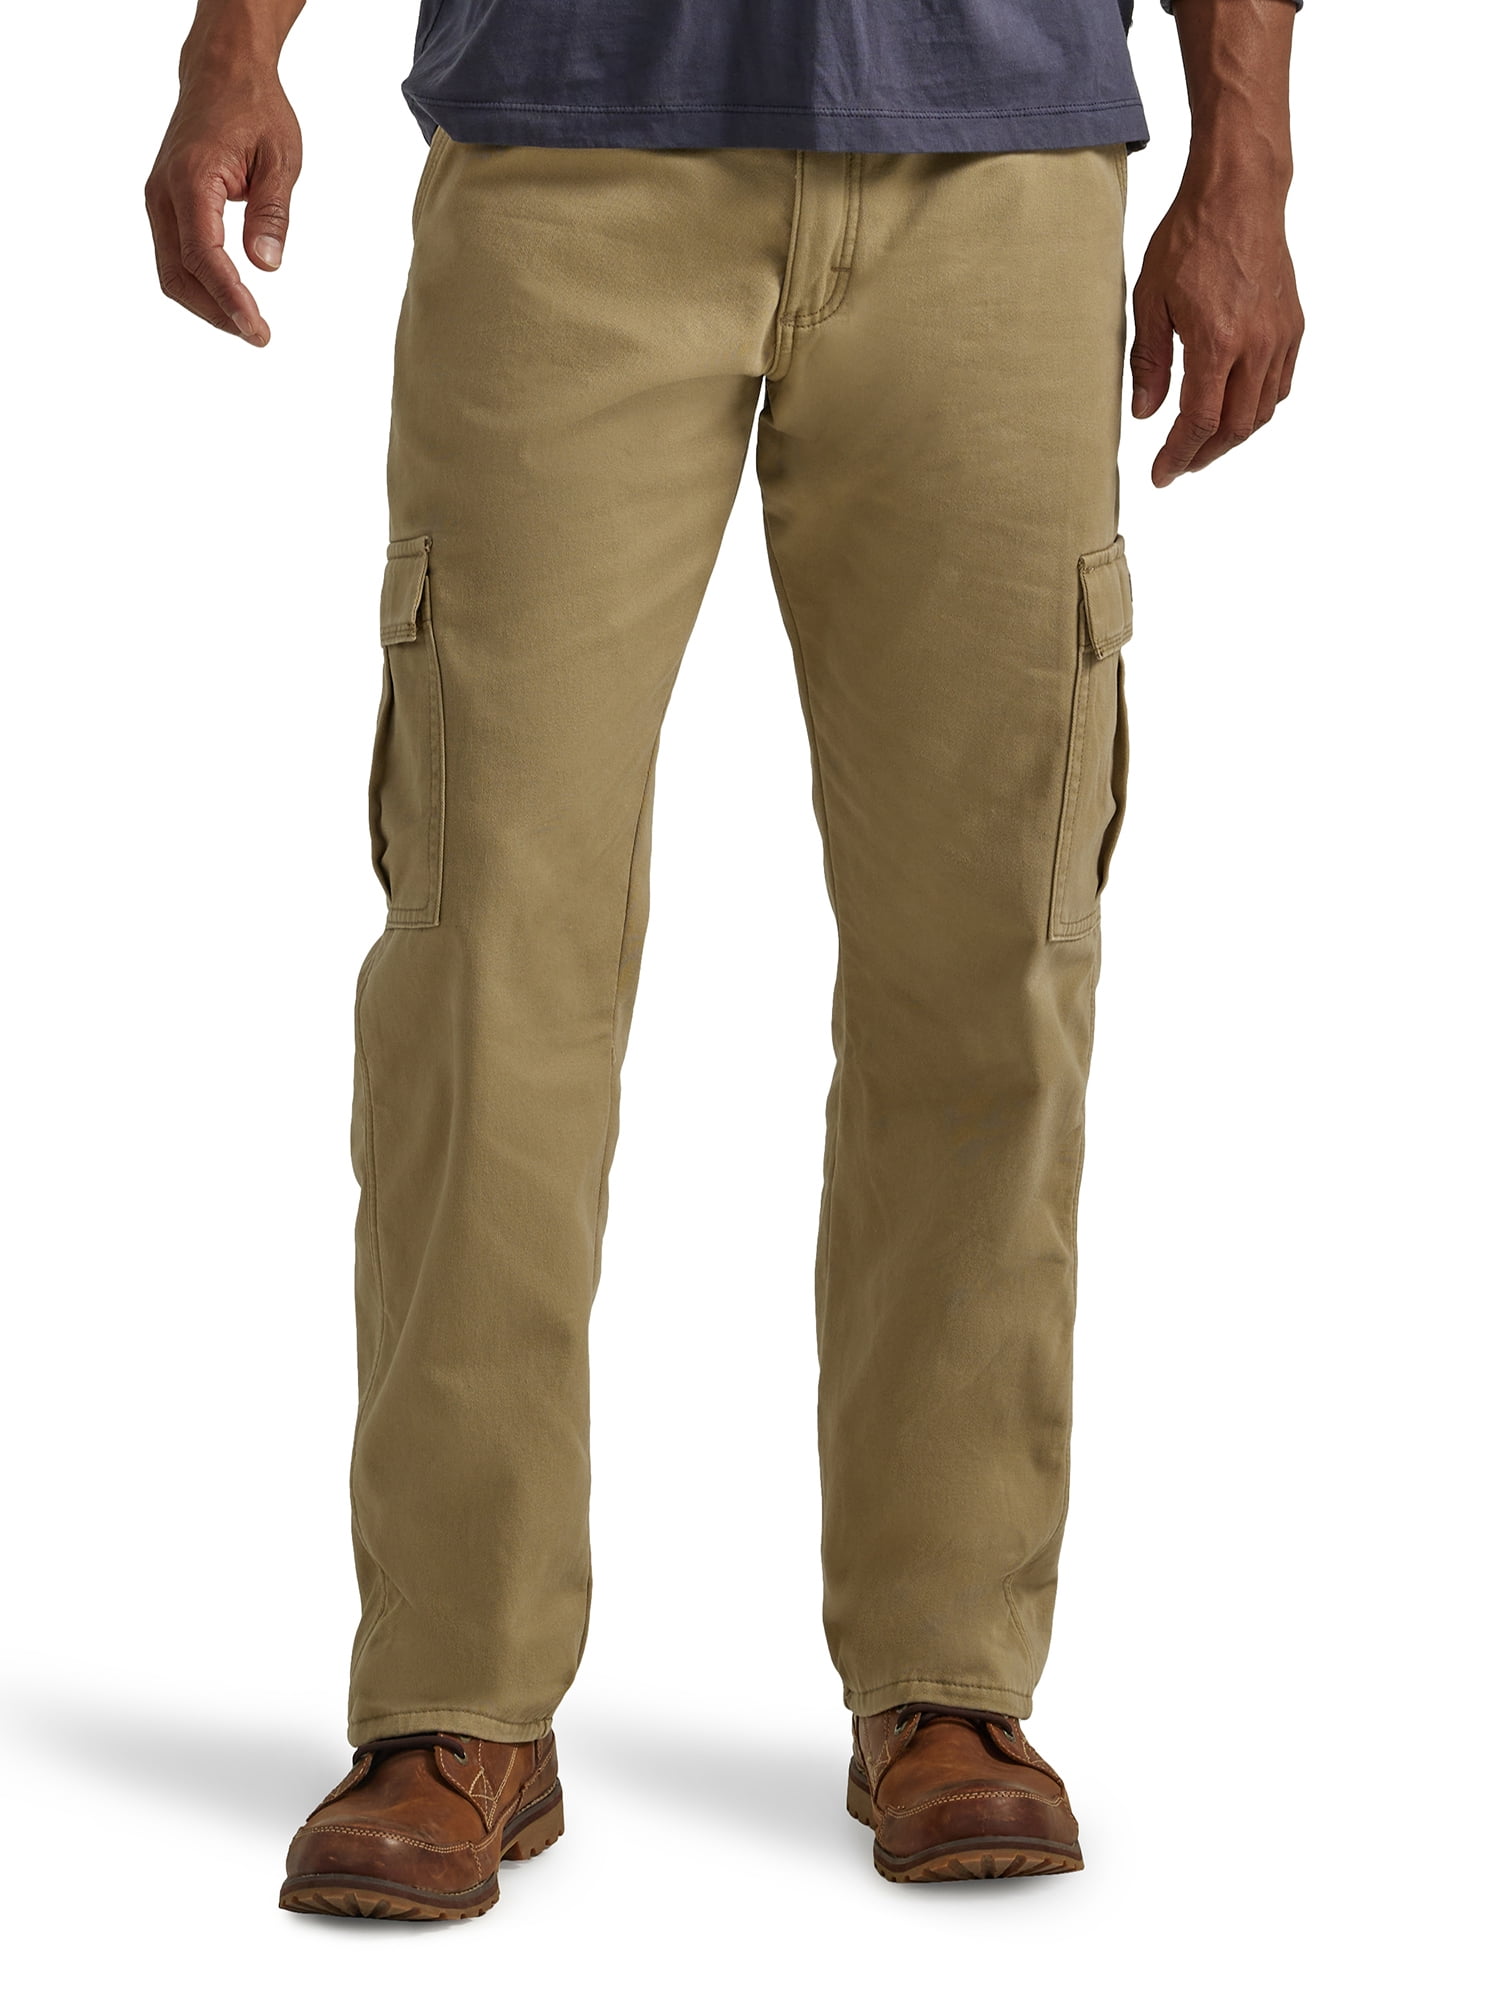 Mens Cargo Pants in Mens Pants   Walmart.com